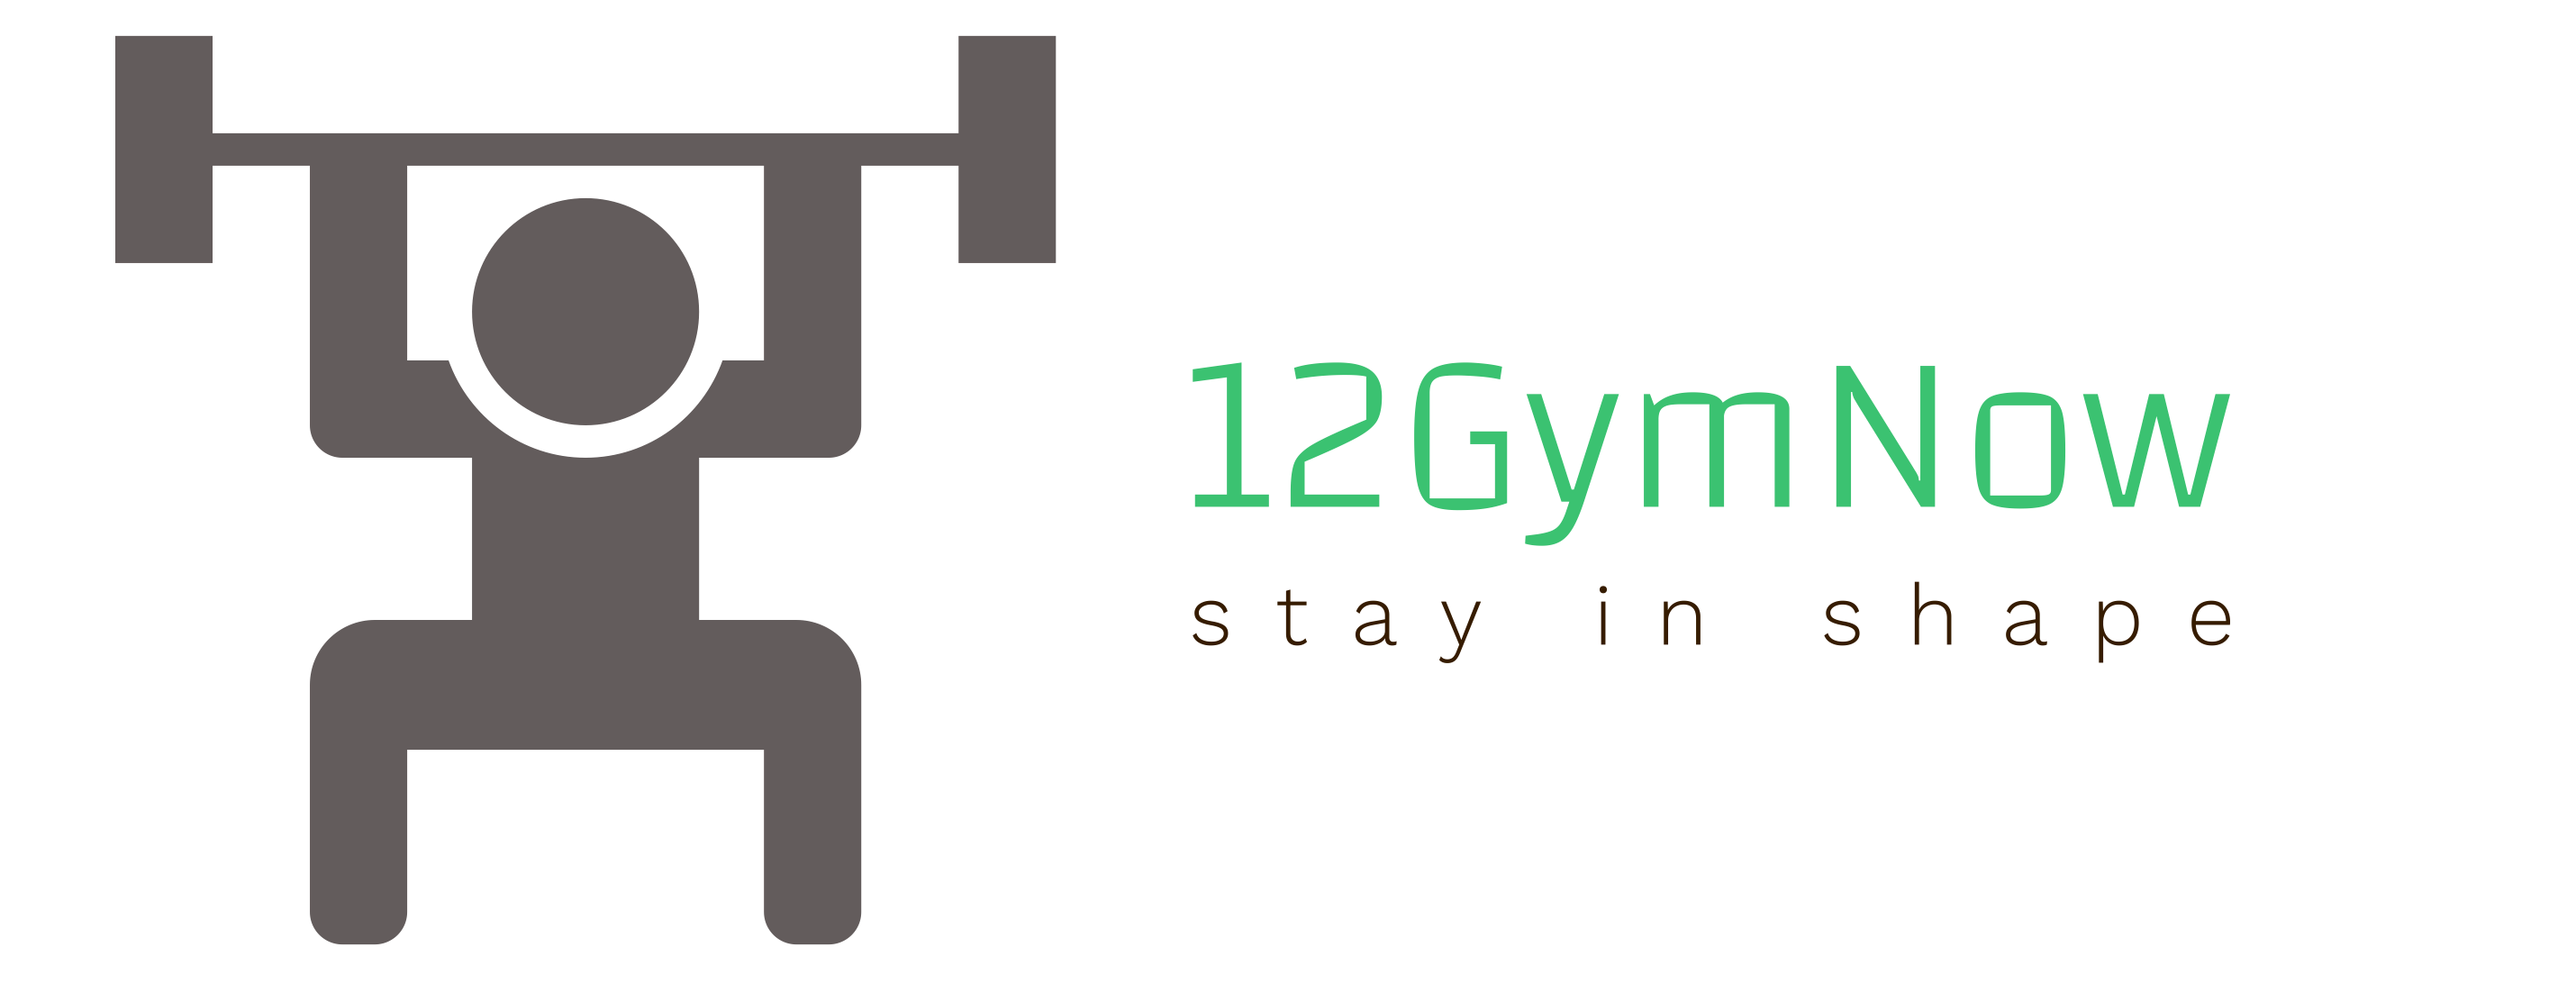 12GymNow - stay in shape